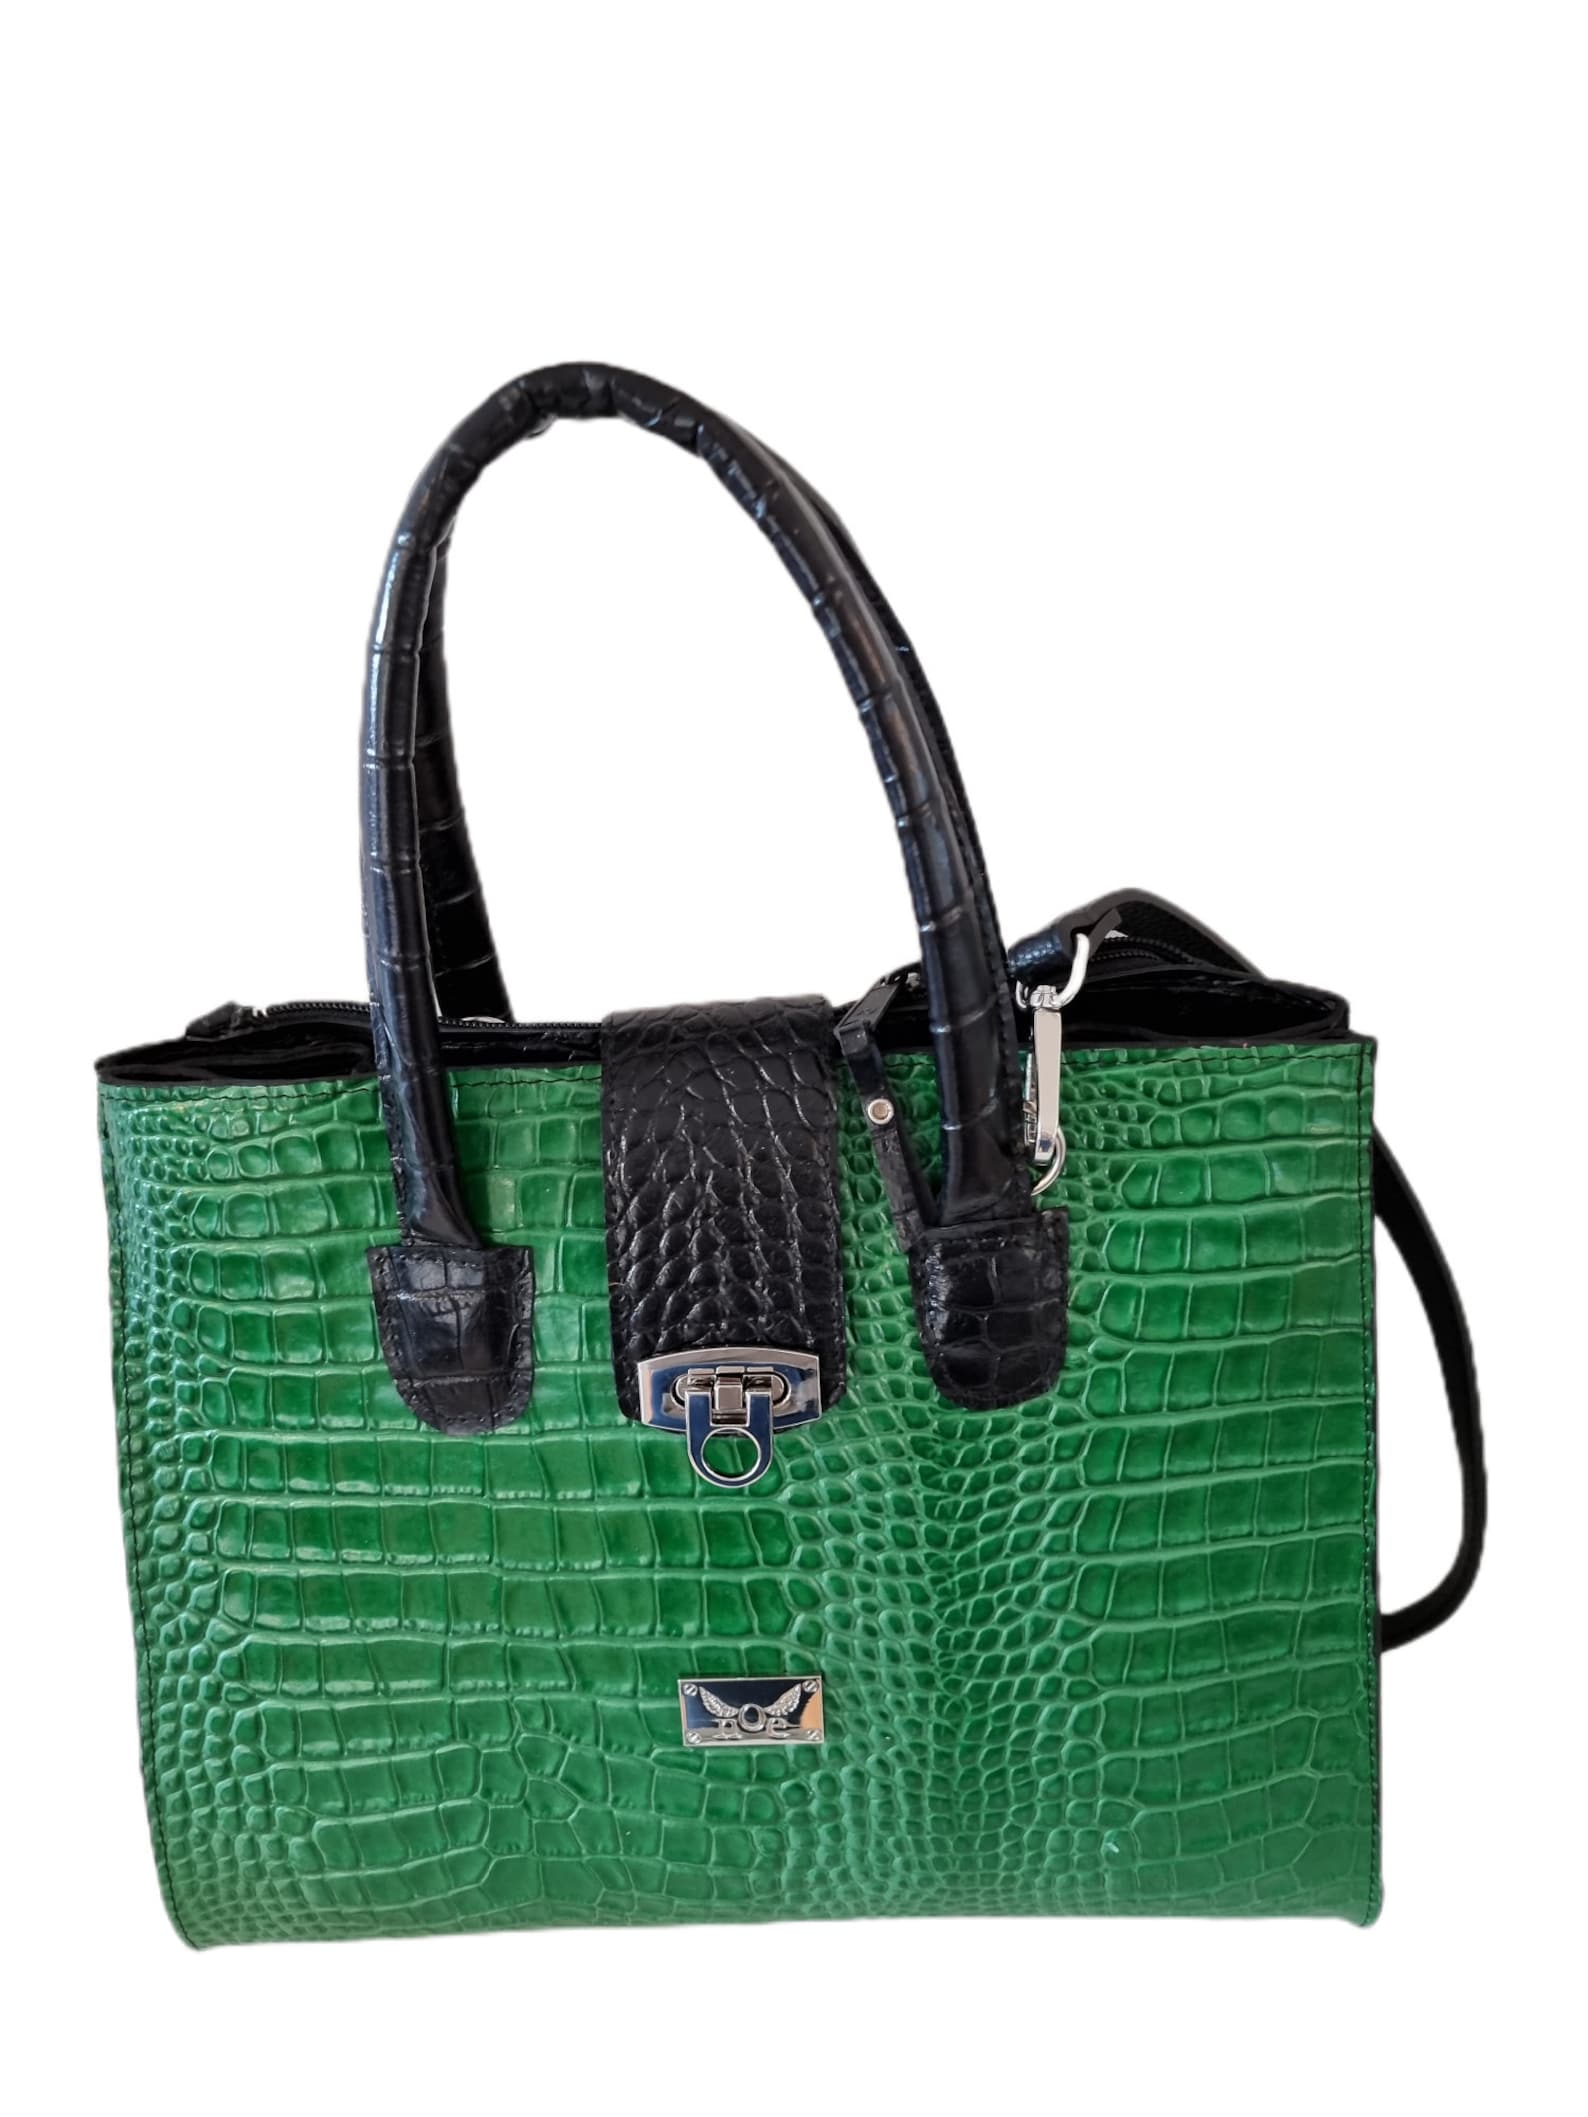 Green black leather handbag women's handbag handle handbag | Etsy